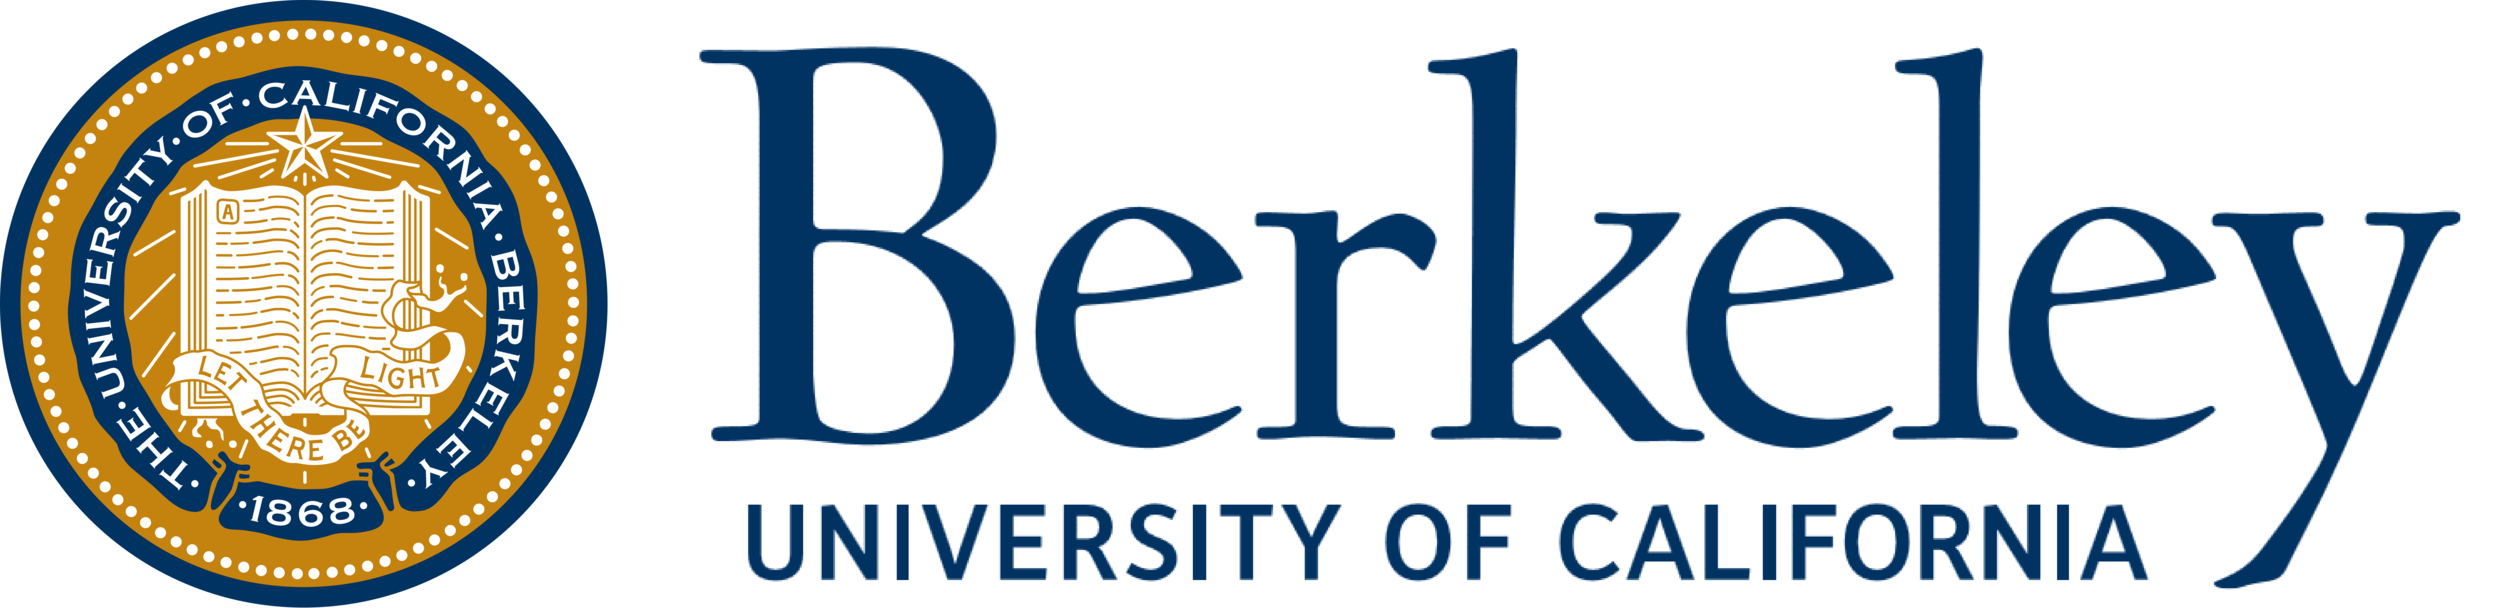 berkeley-logo.png